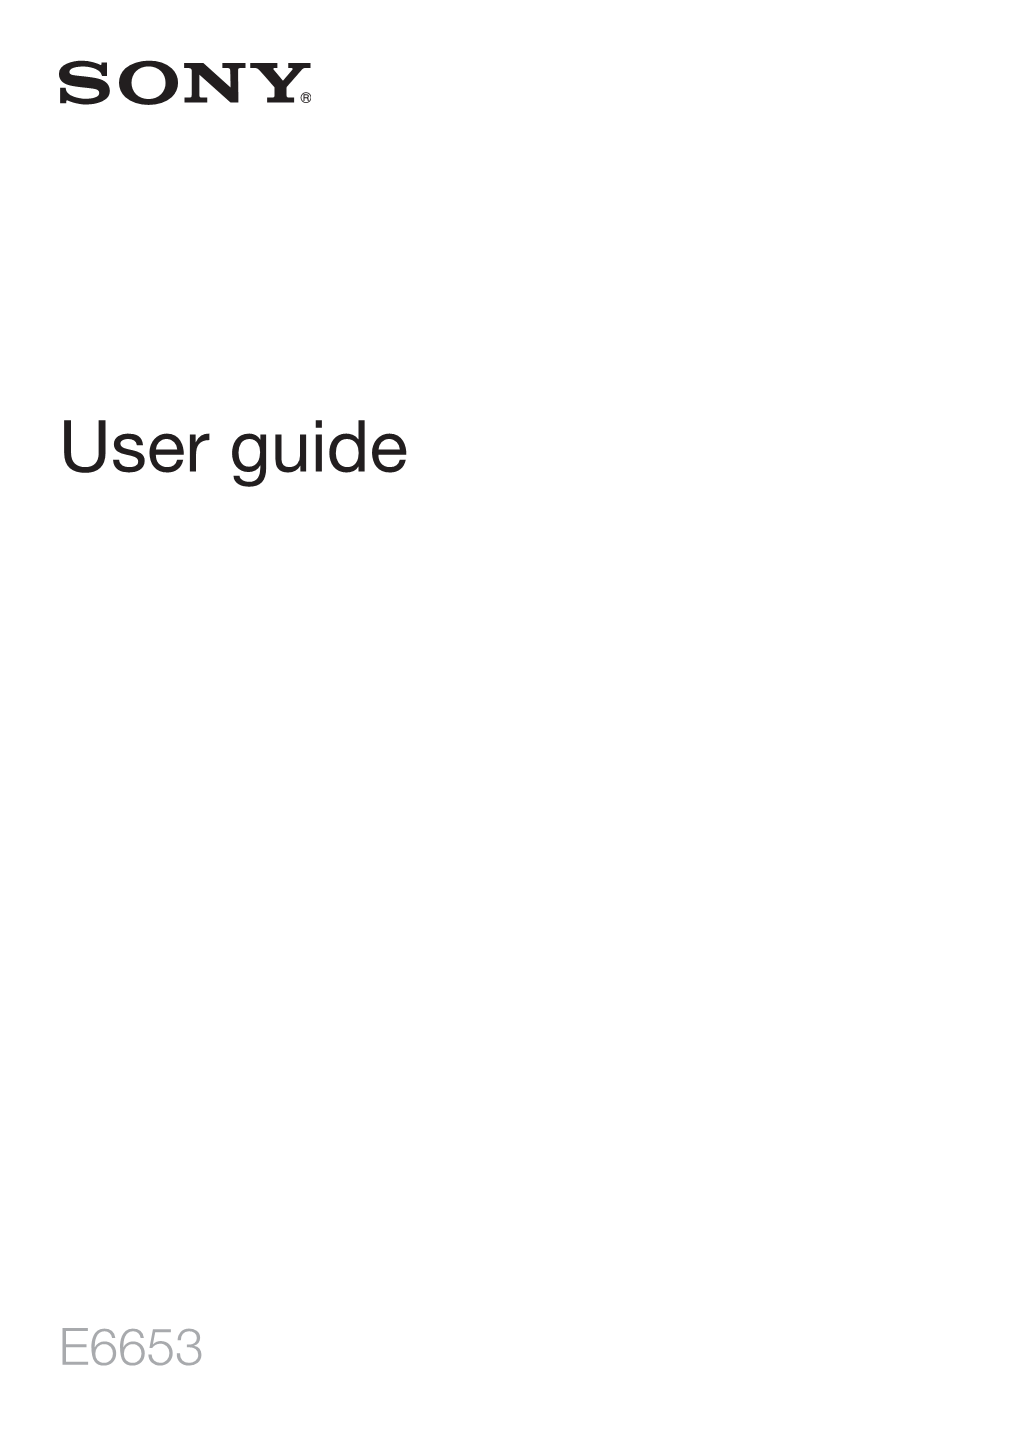 Sony Xperia Z5 User Guide